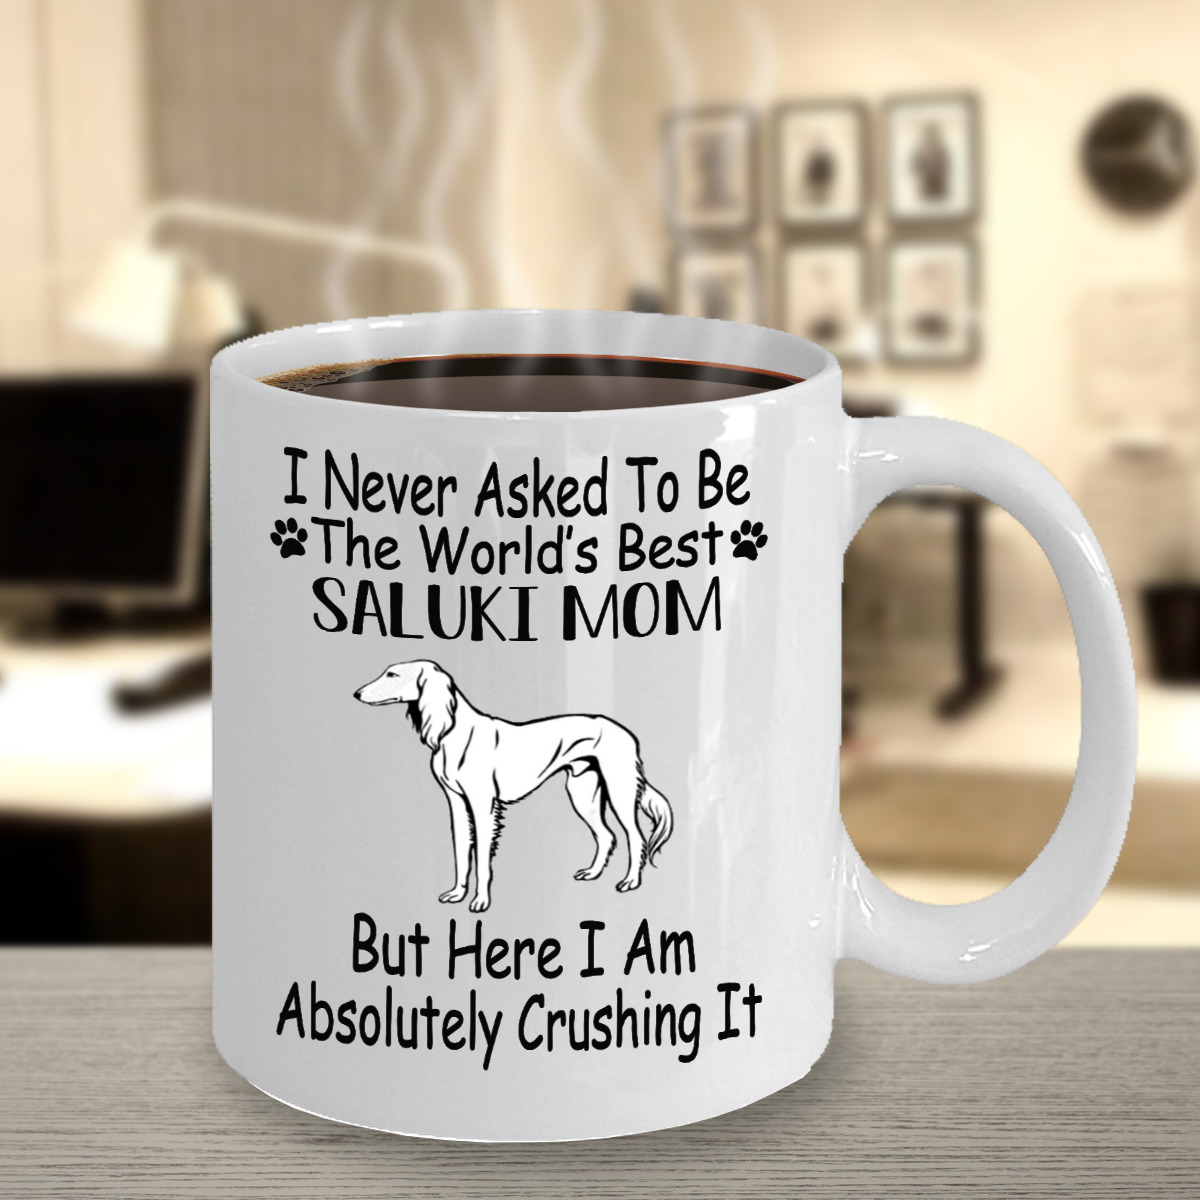 Saluki Dog,saluki,sighthounds,sighthounds Dog,salukis,salukis Dog,cup,mug